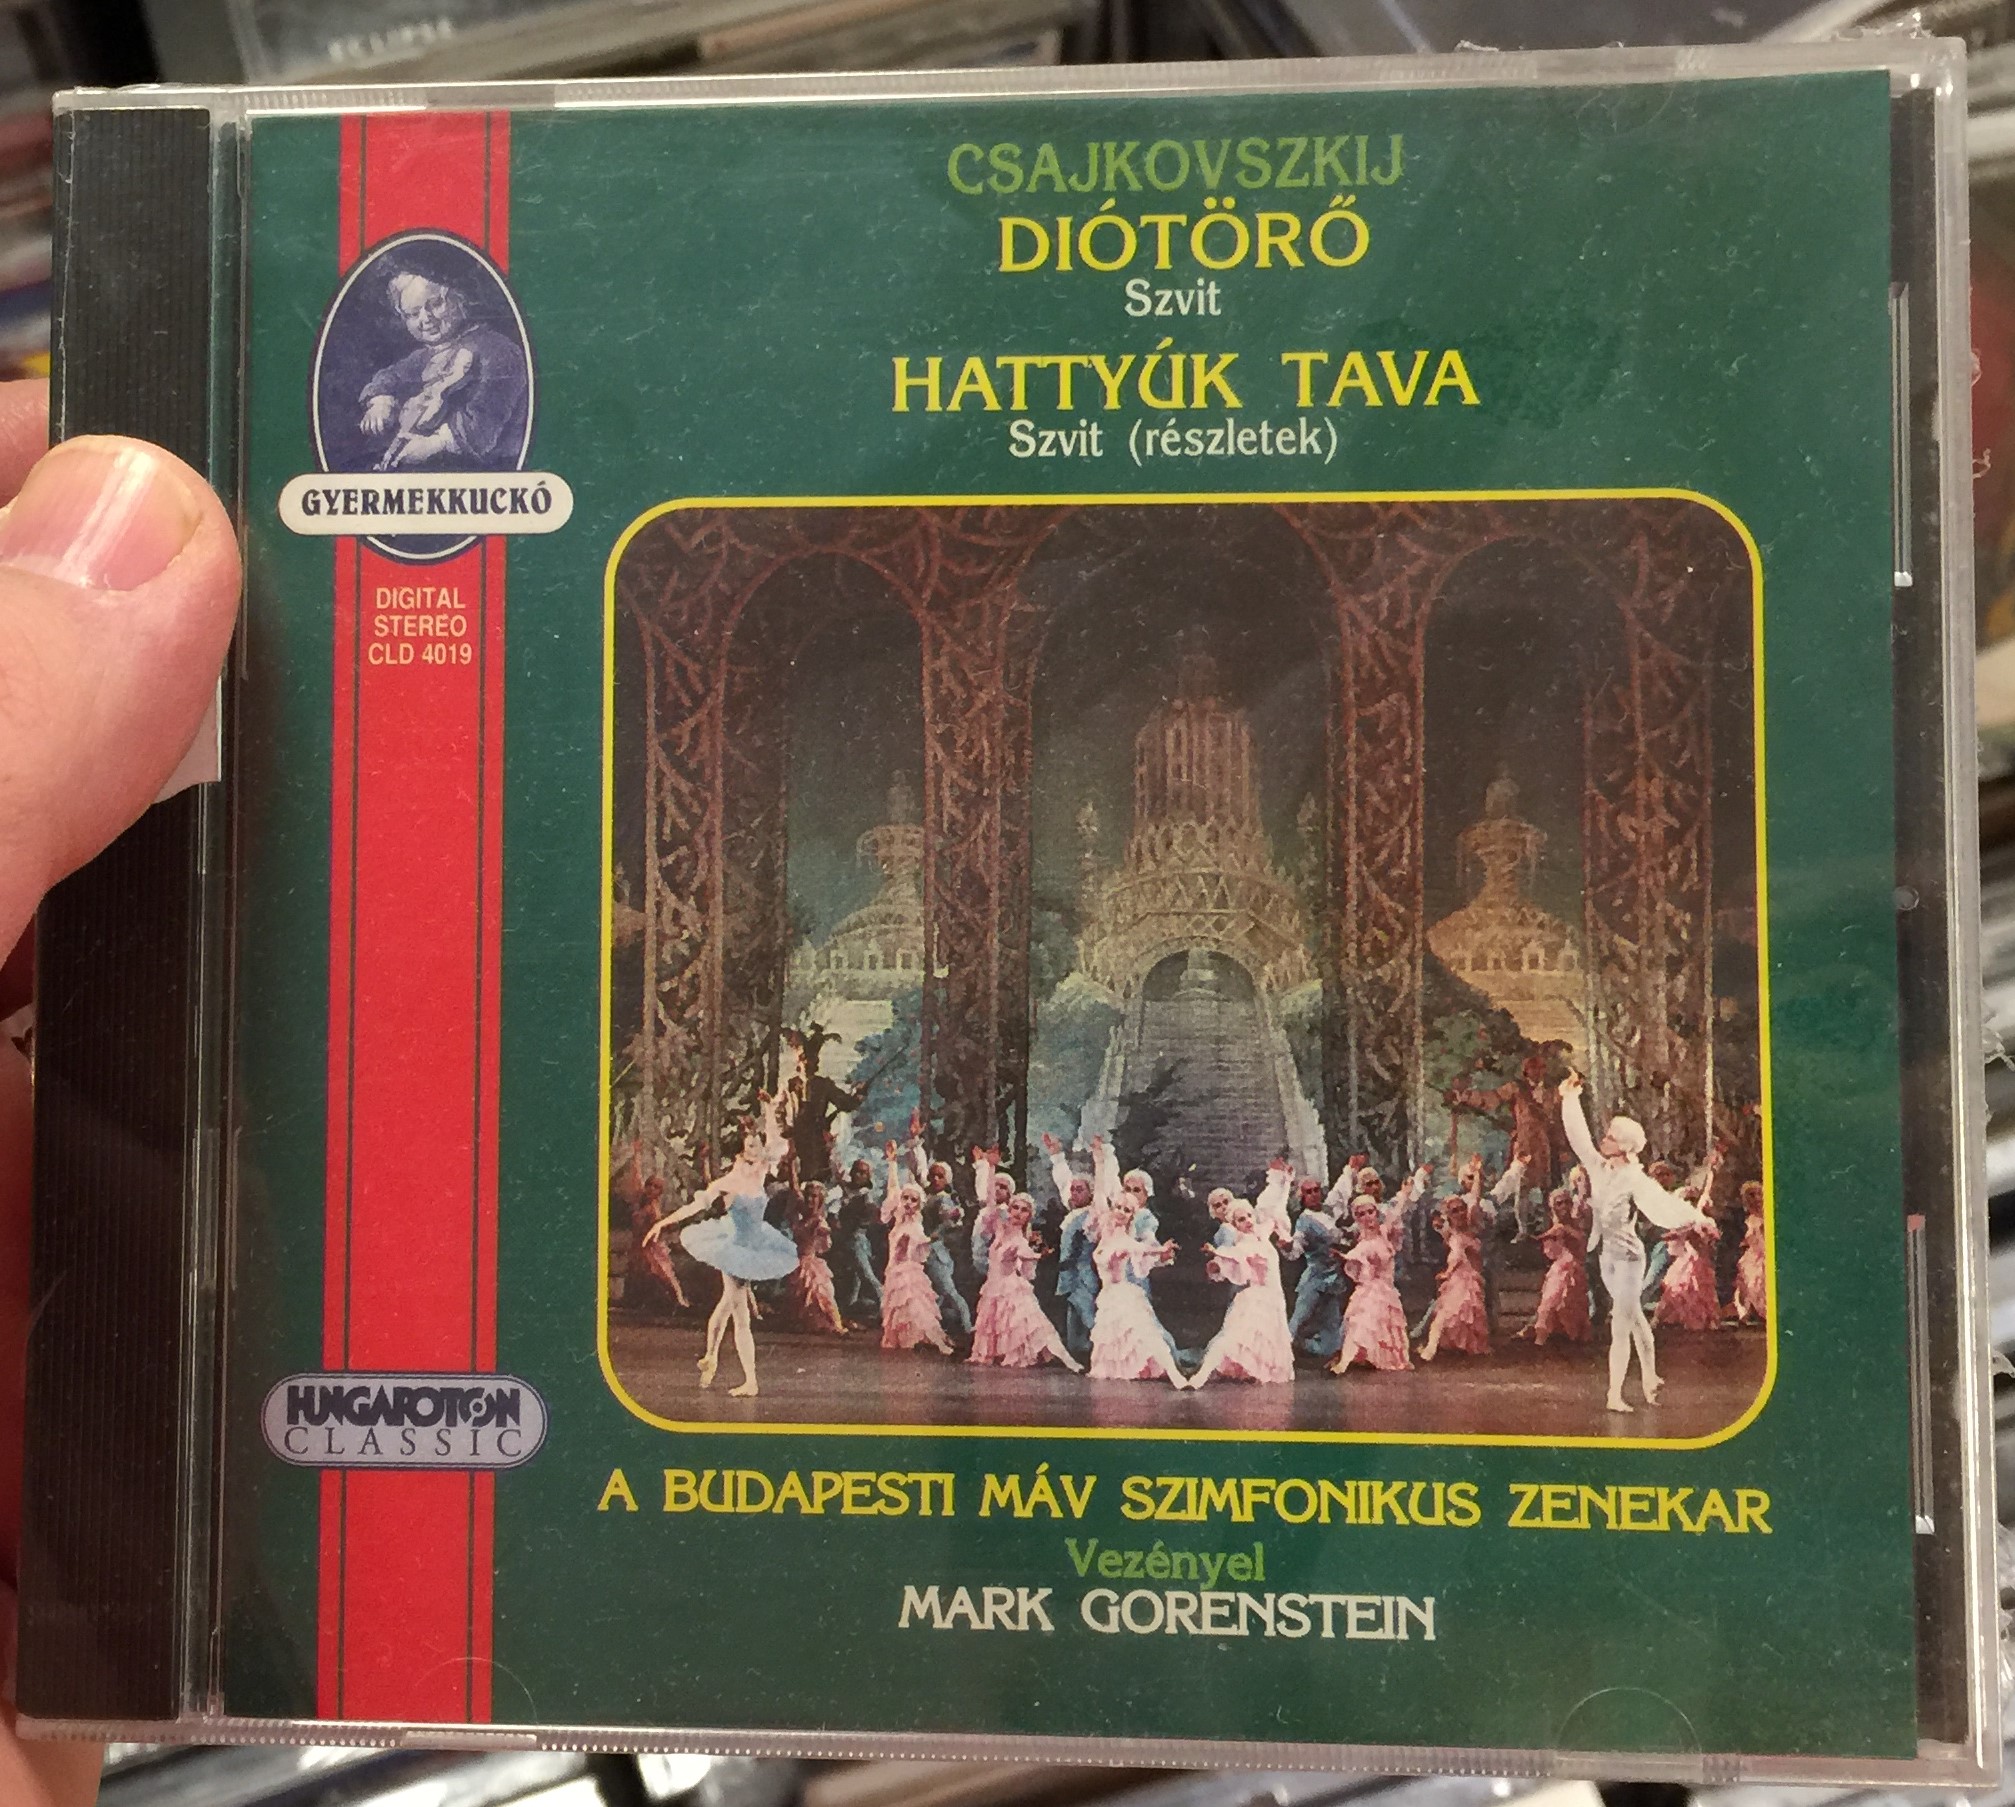 csajkovszkij-diotoro-szvit-hattyuk-tava-szvit-reszletek-a-budapesti-mav-szimfonikus-zenekar-vezenyel-mark-gorenstein-hungaroton-classic-audio-cd-1996-stereo-cld-4019-1-.jpg